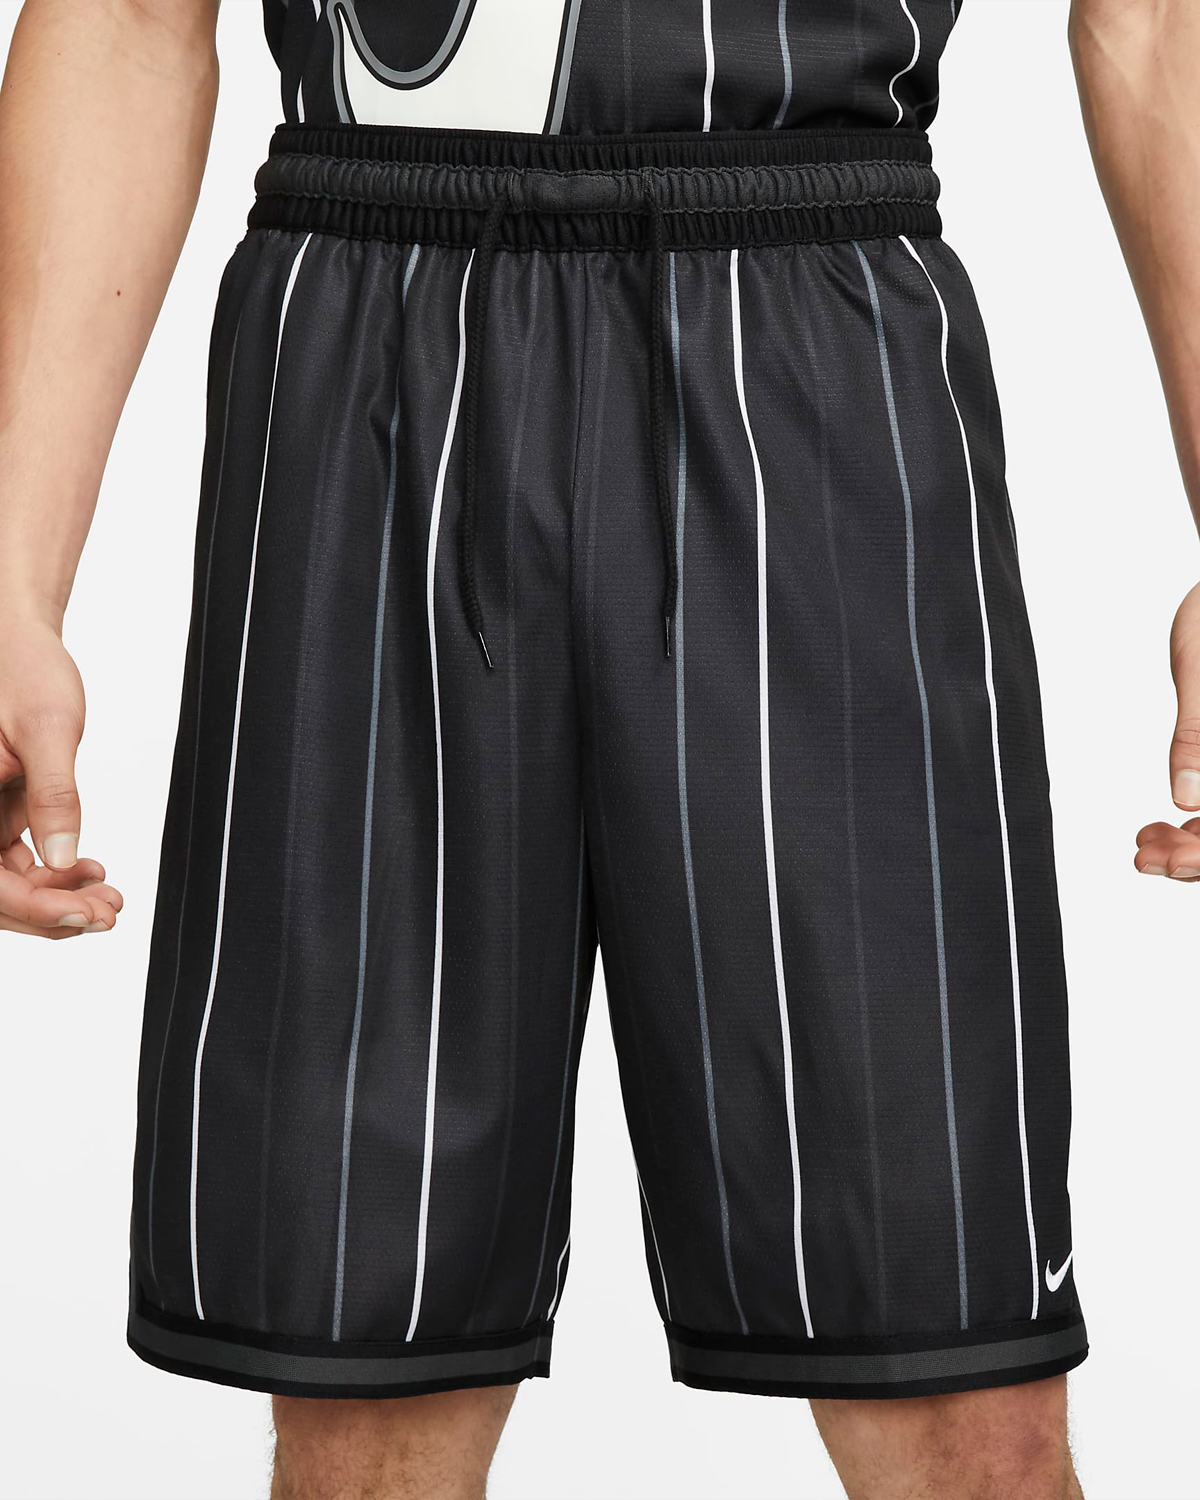 Nike-DNA-Basketball-Shorts-Black-White